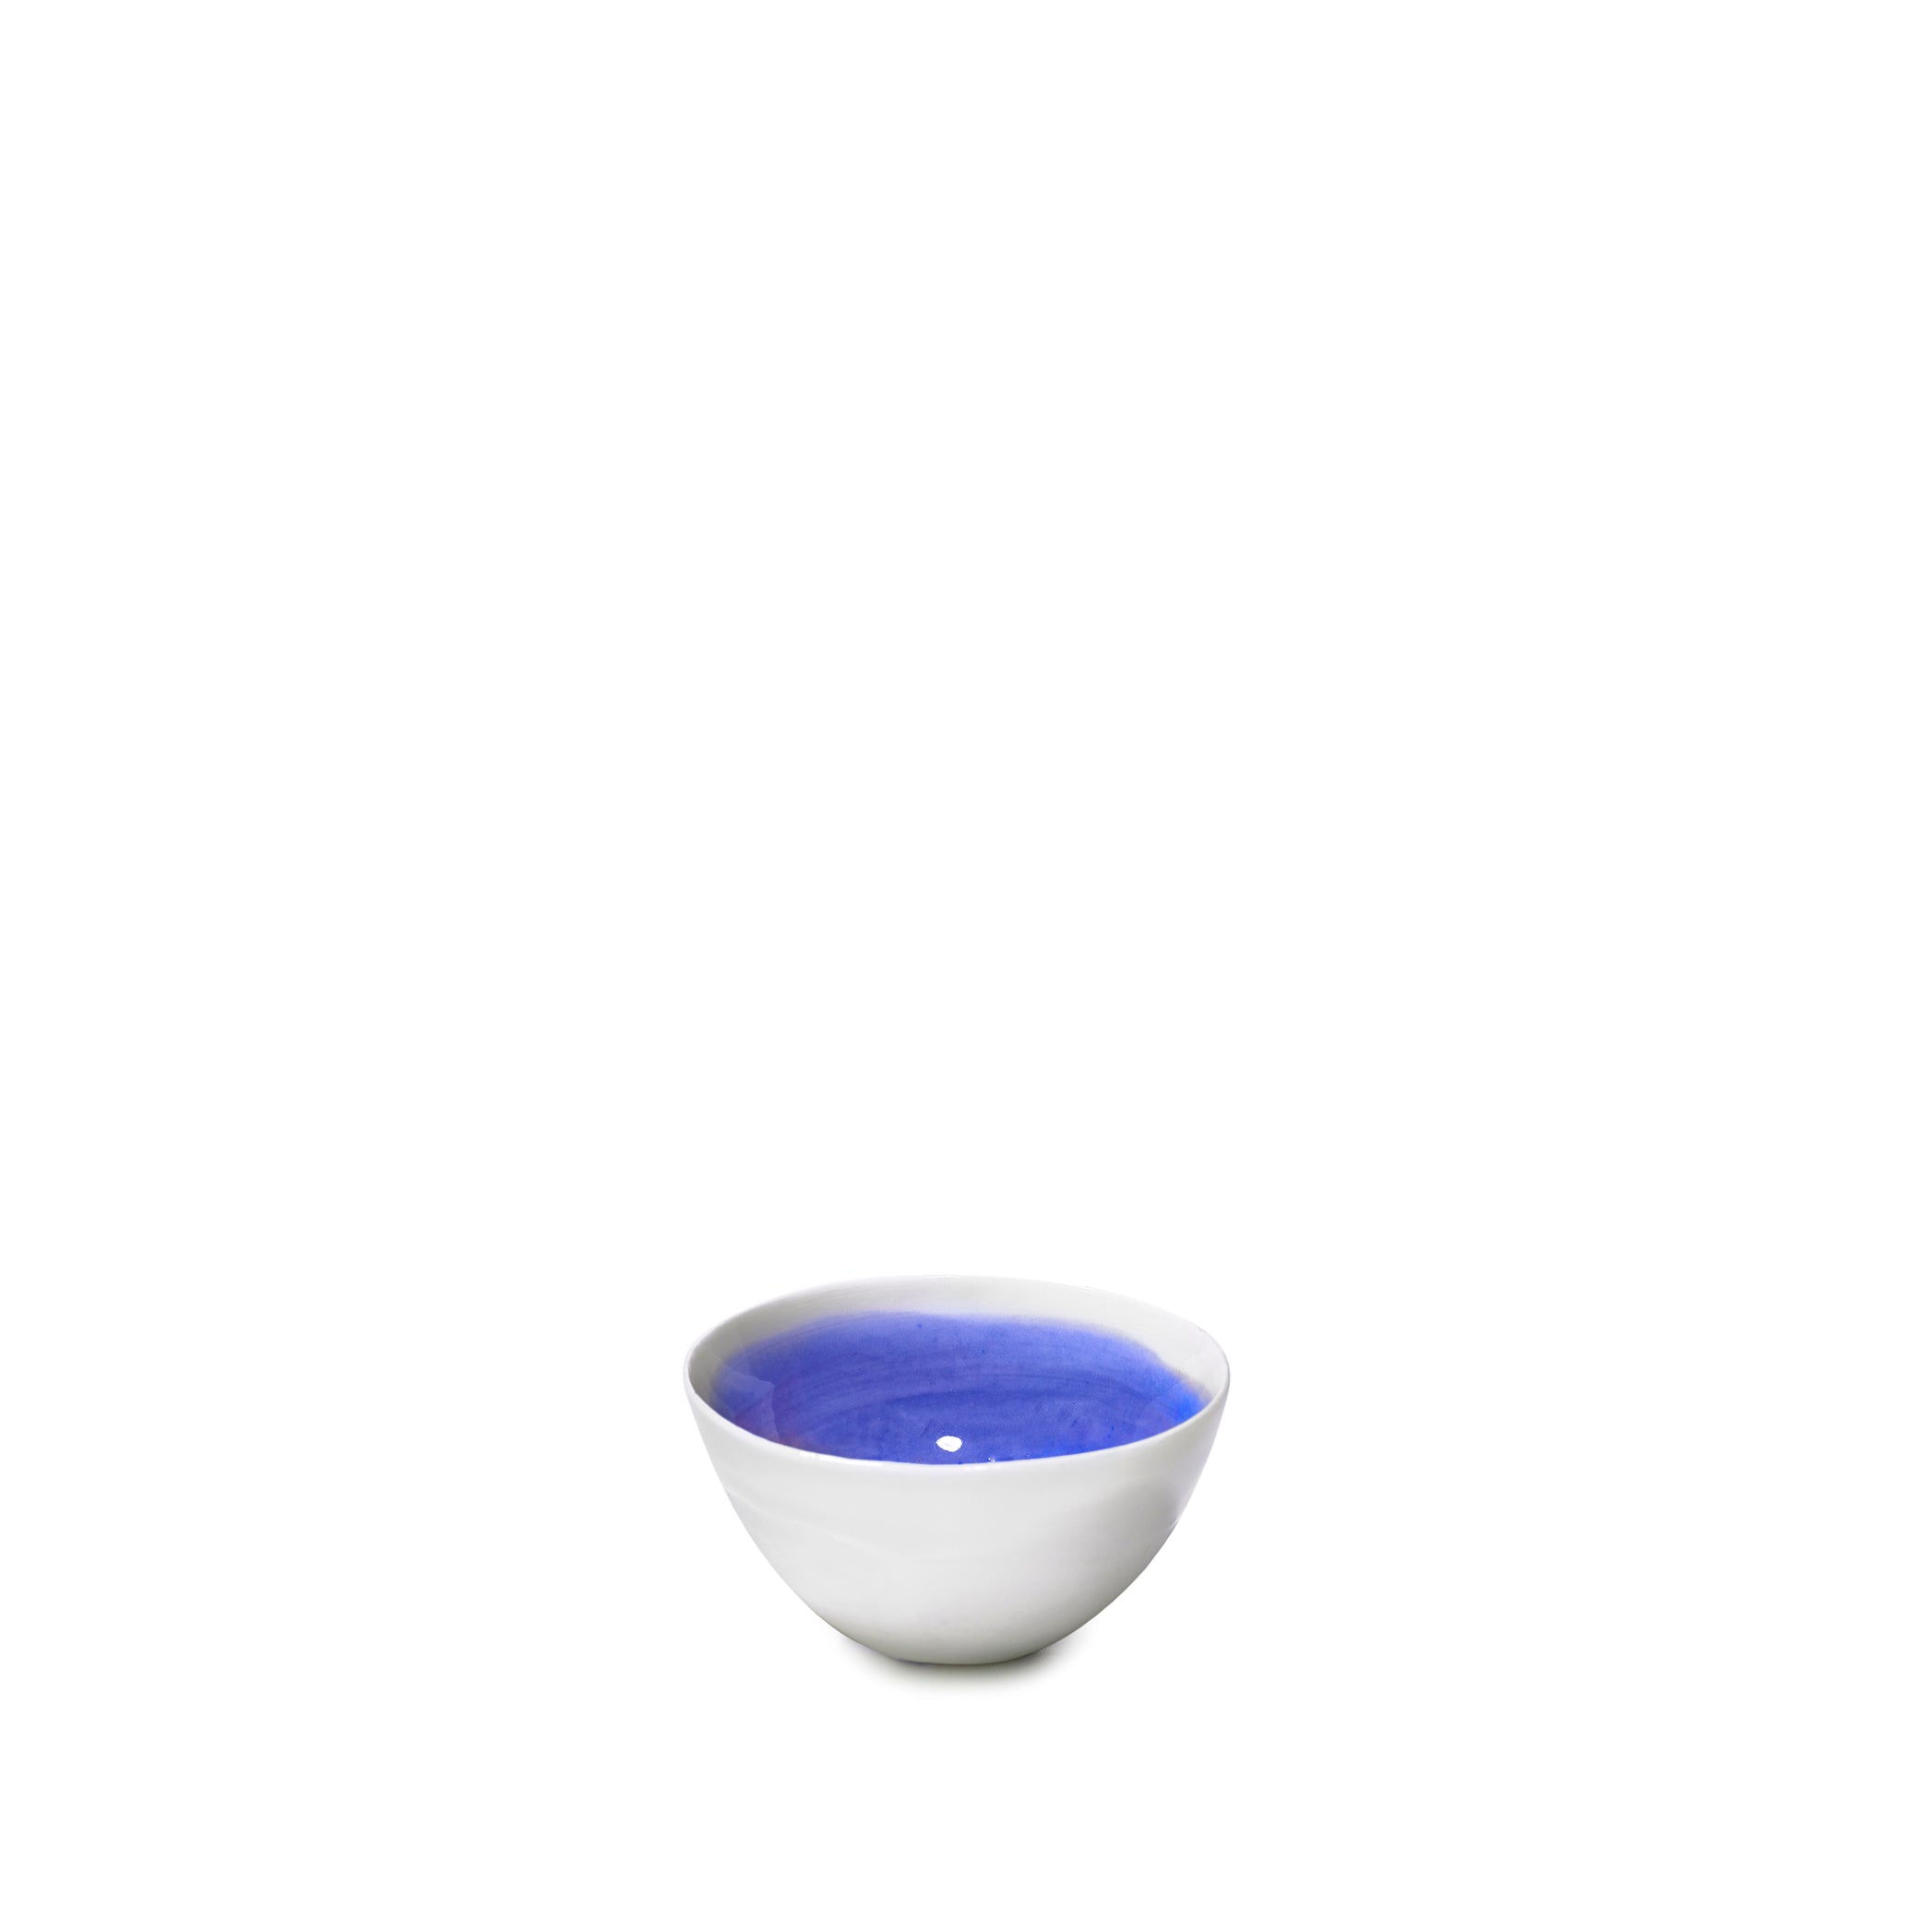 Small Dark Blue Ceramic Bowl with White Edge, 8cm